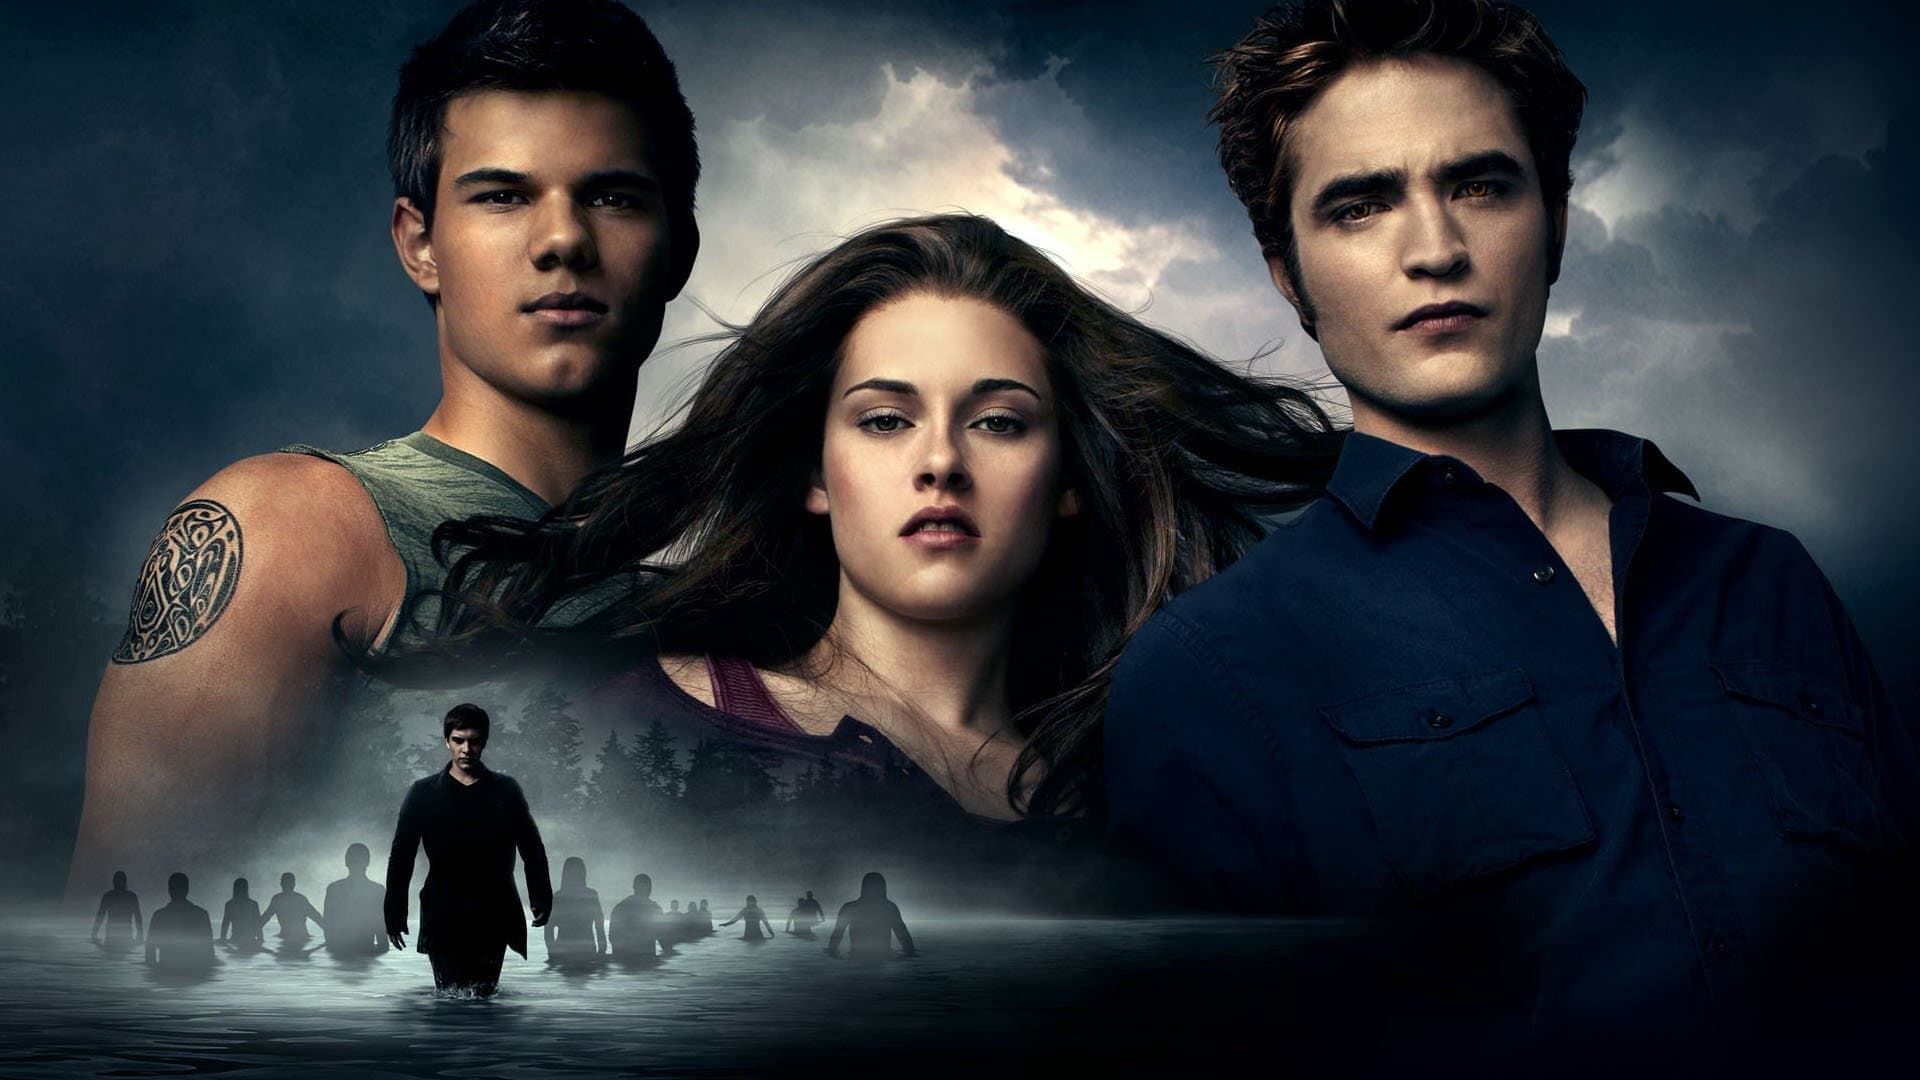 The Twilight Saga: Eclipse Backdrop